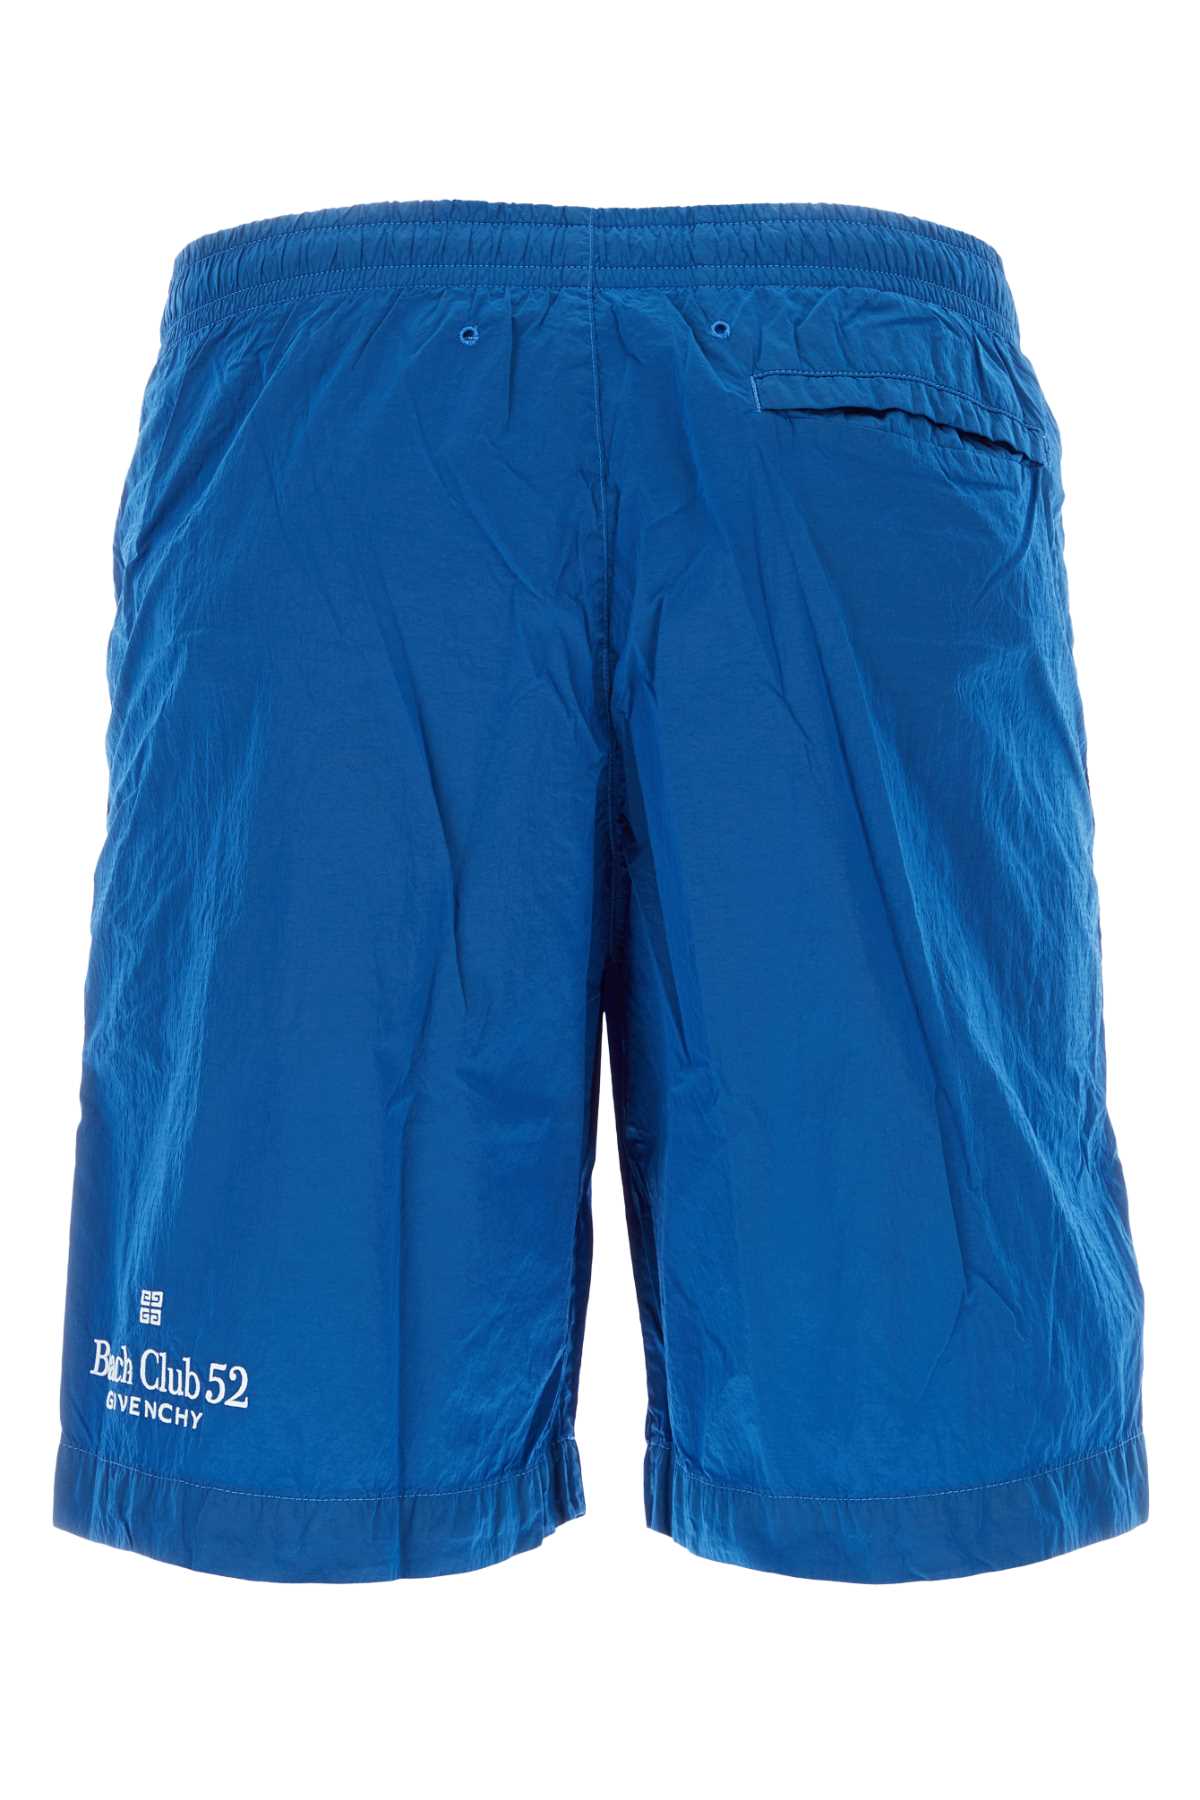 Givenchy Blue Nylon Swimming Shorts In Mineralblue